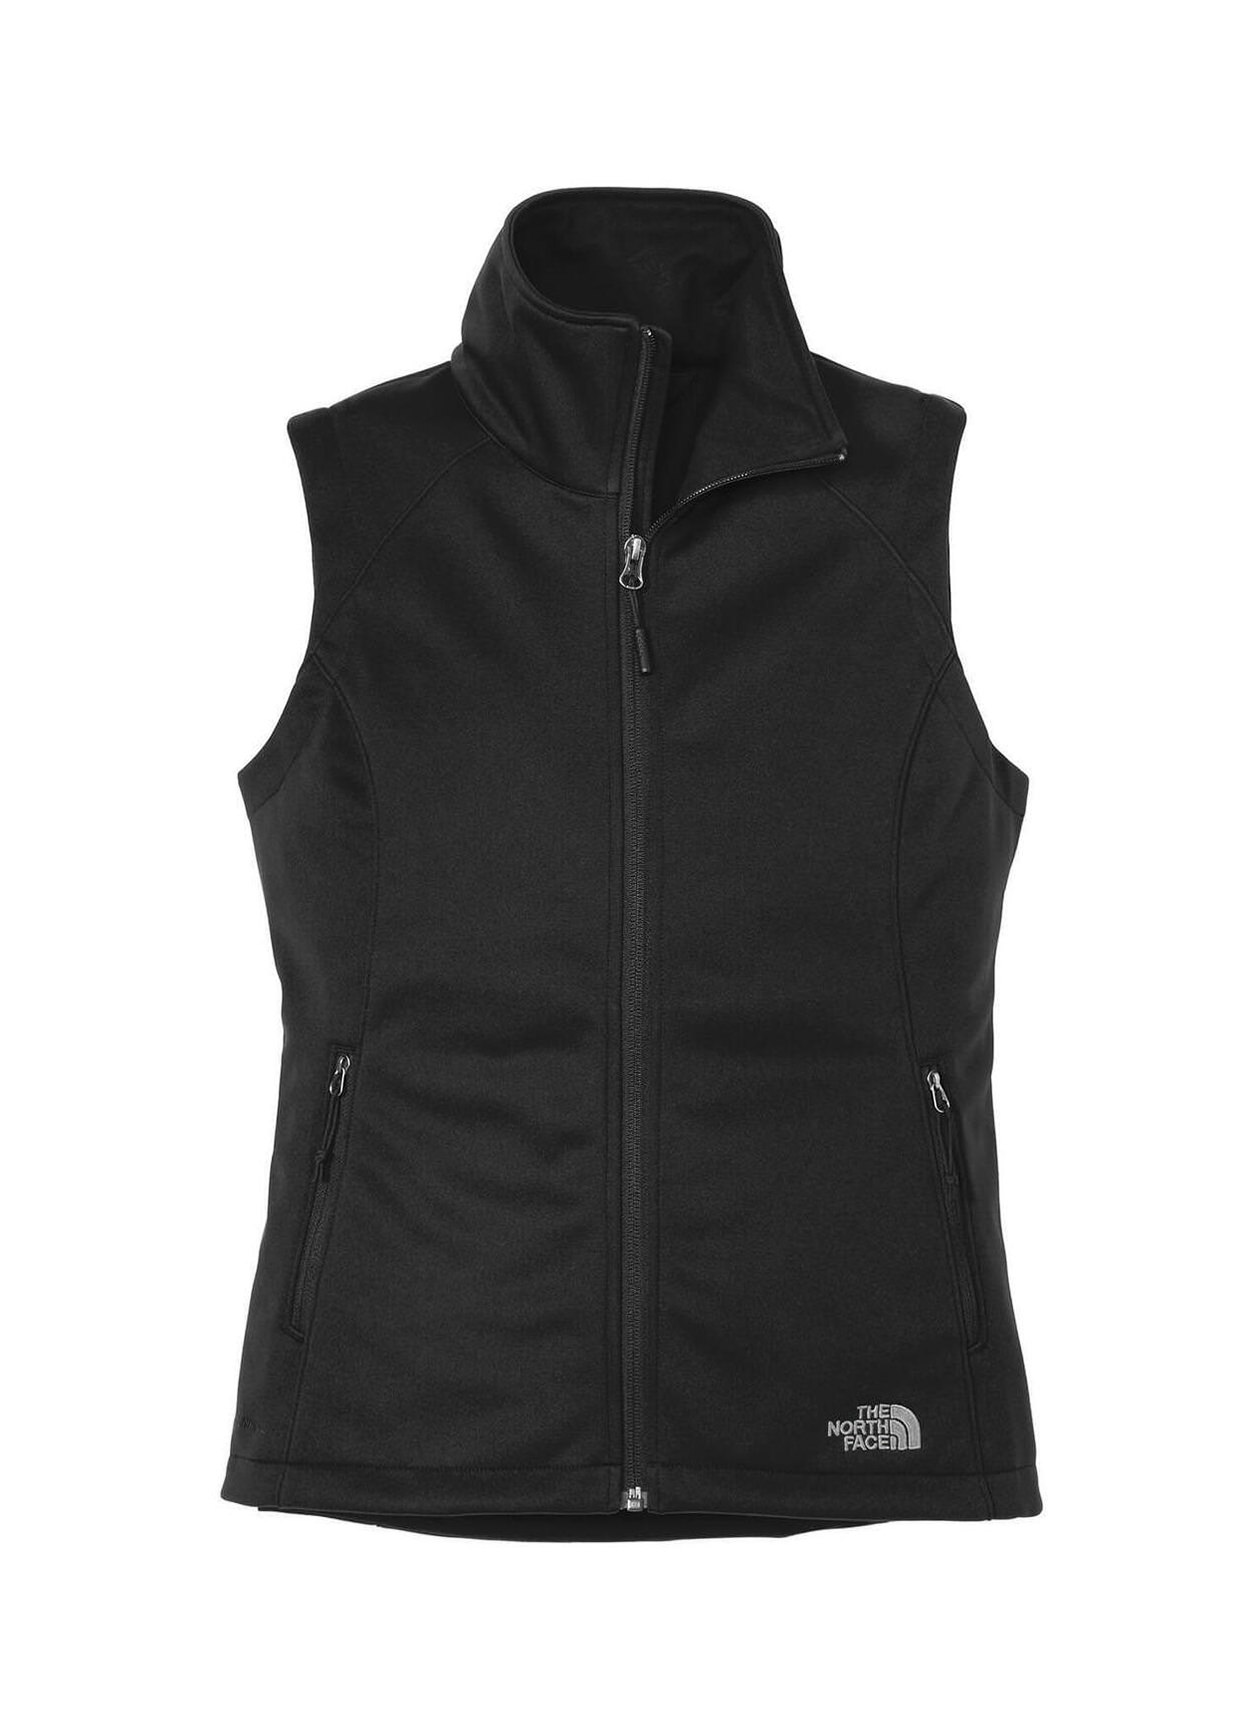 The North Face Women's TNF Black Ridgewall Soft Shell Vest